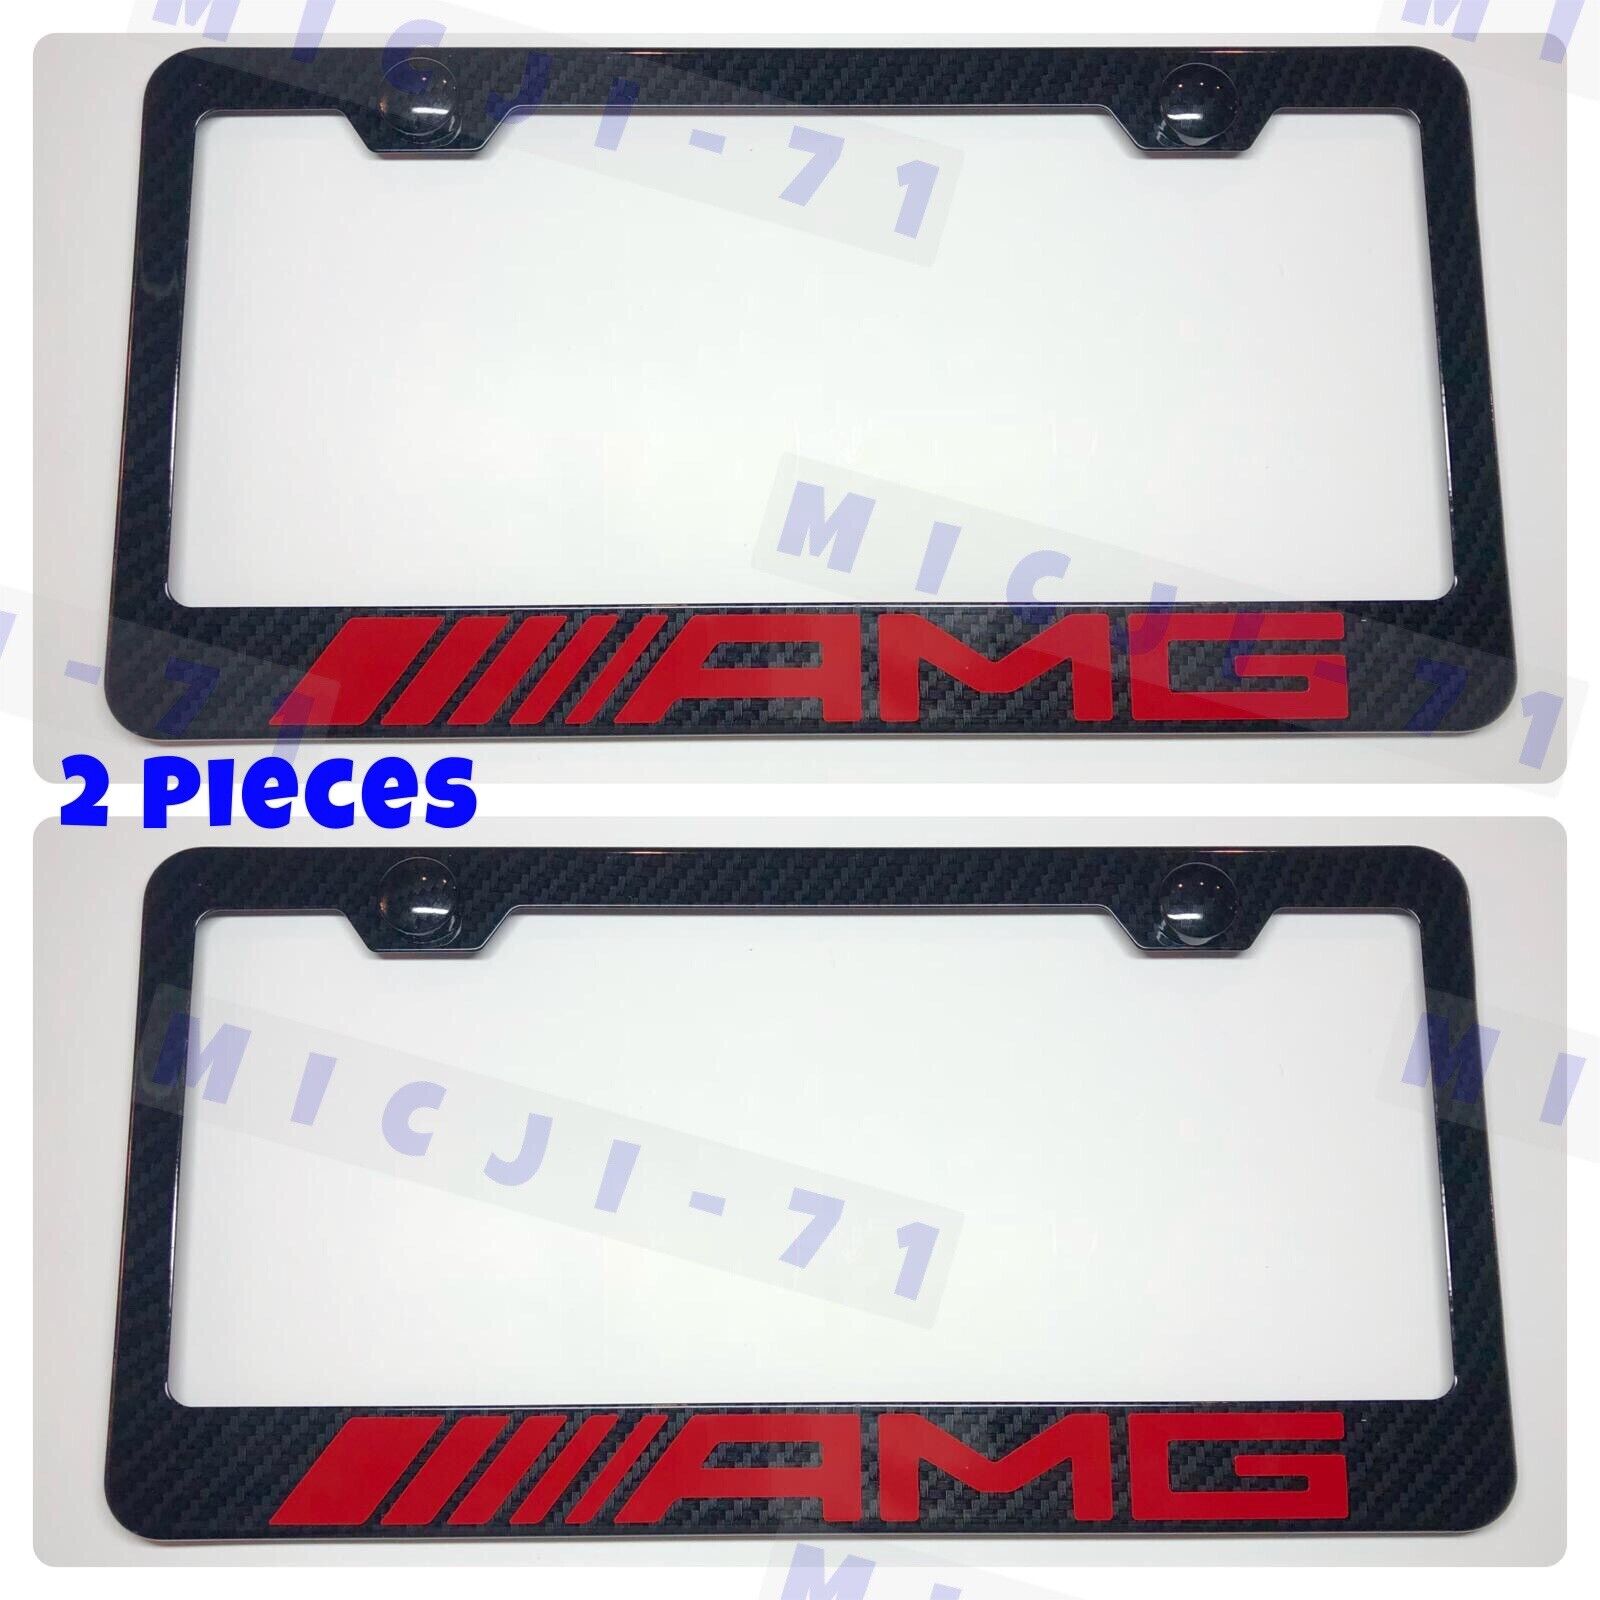 X2 100% AMG Carbon Fiber Style Stainless Steel License Plate Frame Holder